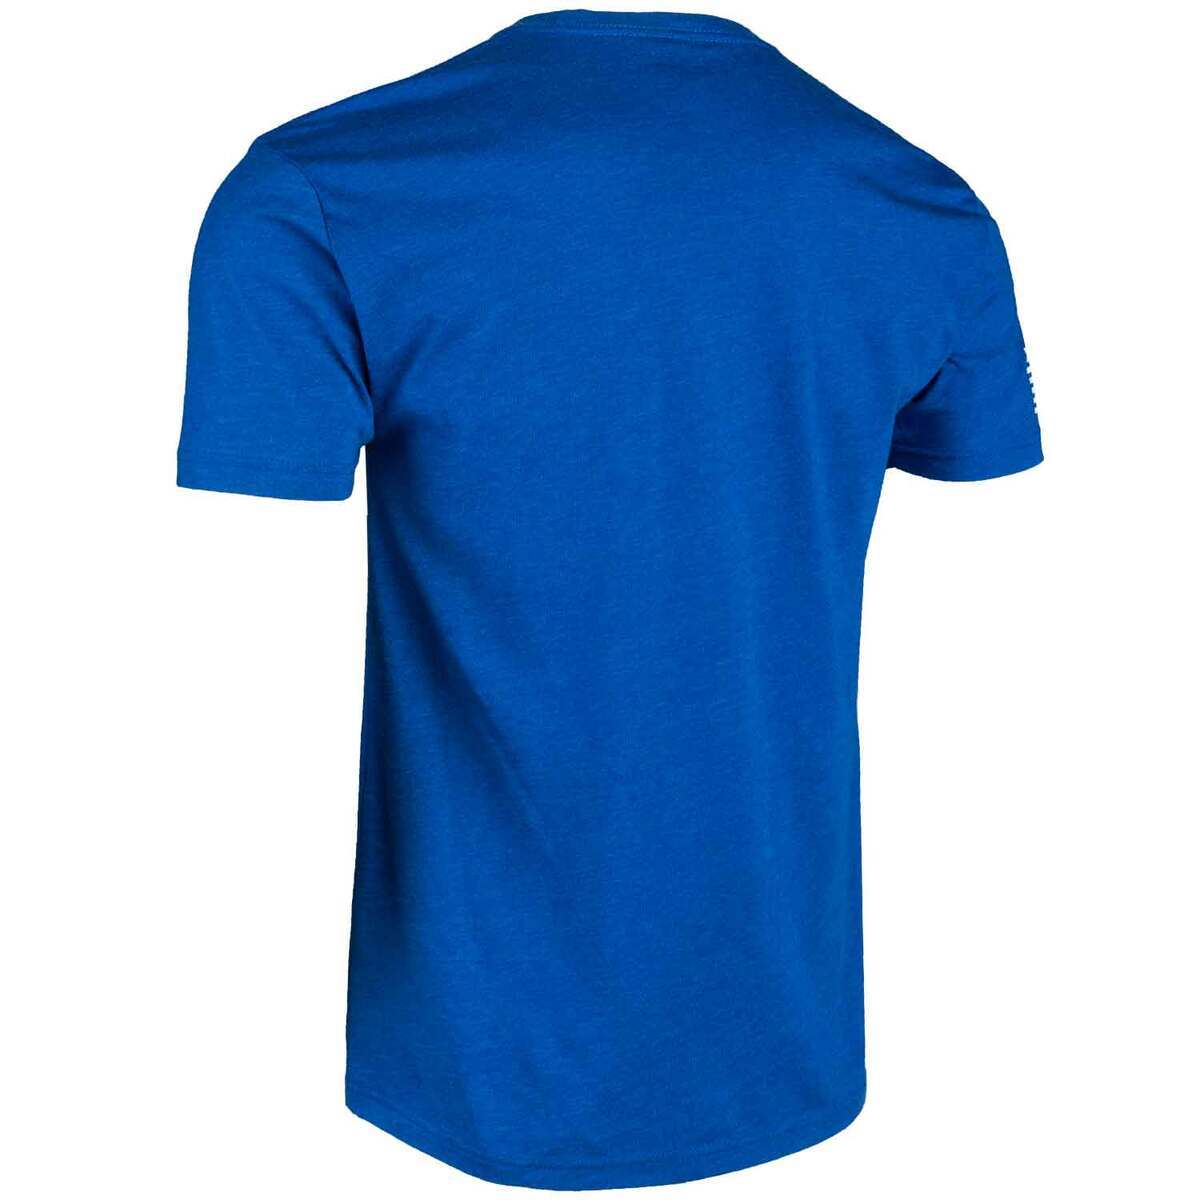 Legacy Men's Logo Short Sleeve Casual Shirt | Sportsman's Warehouse